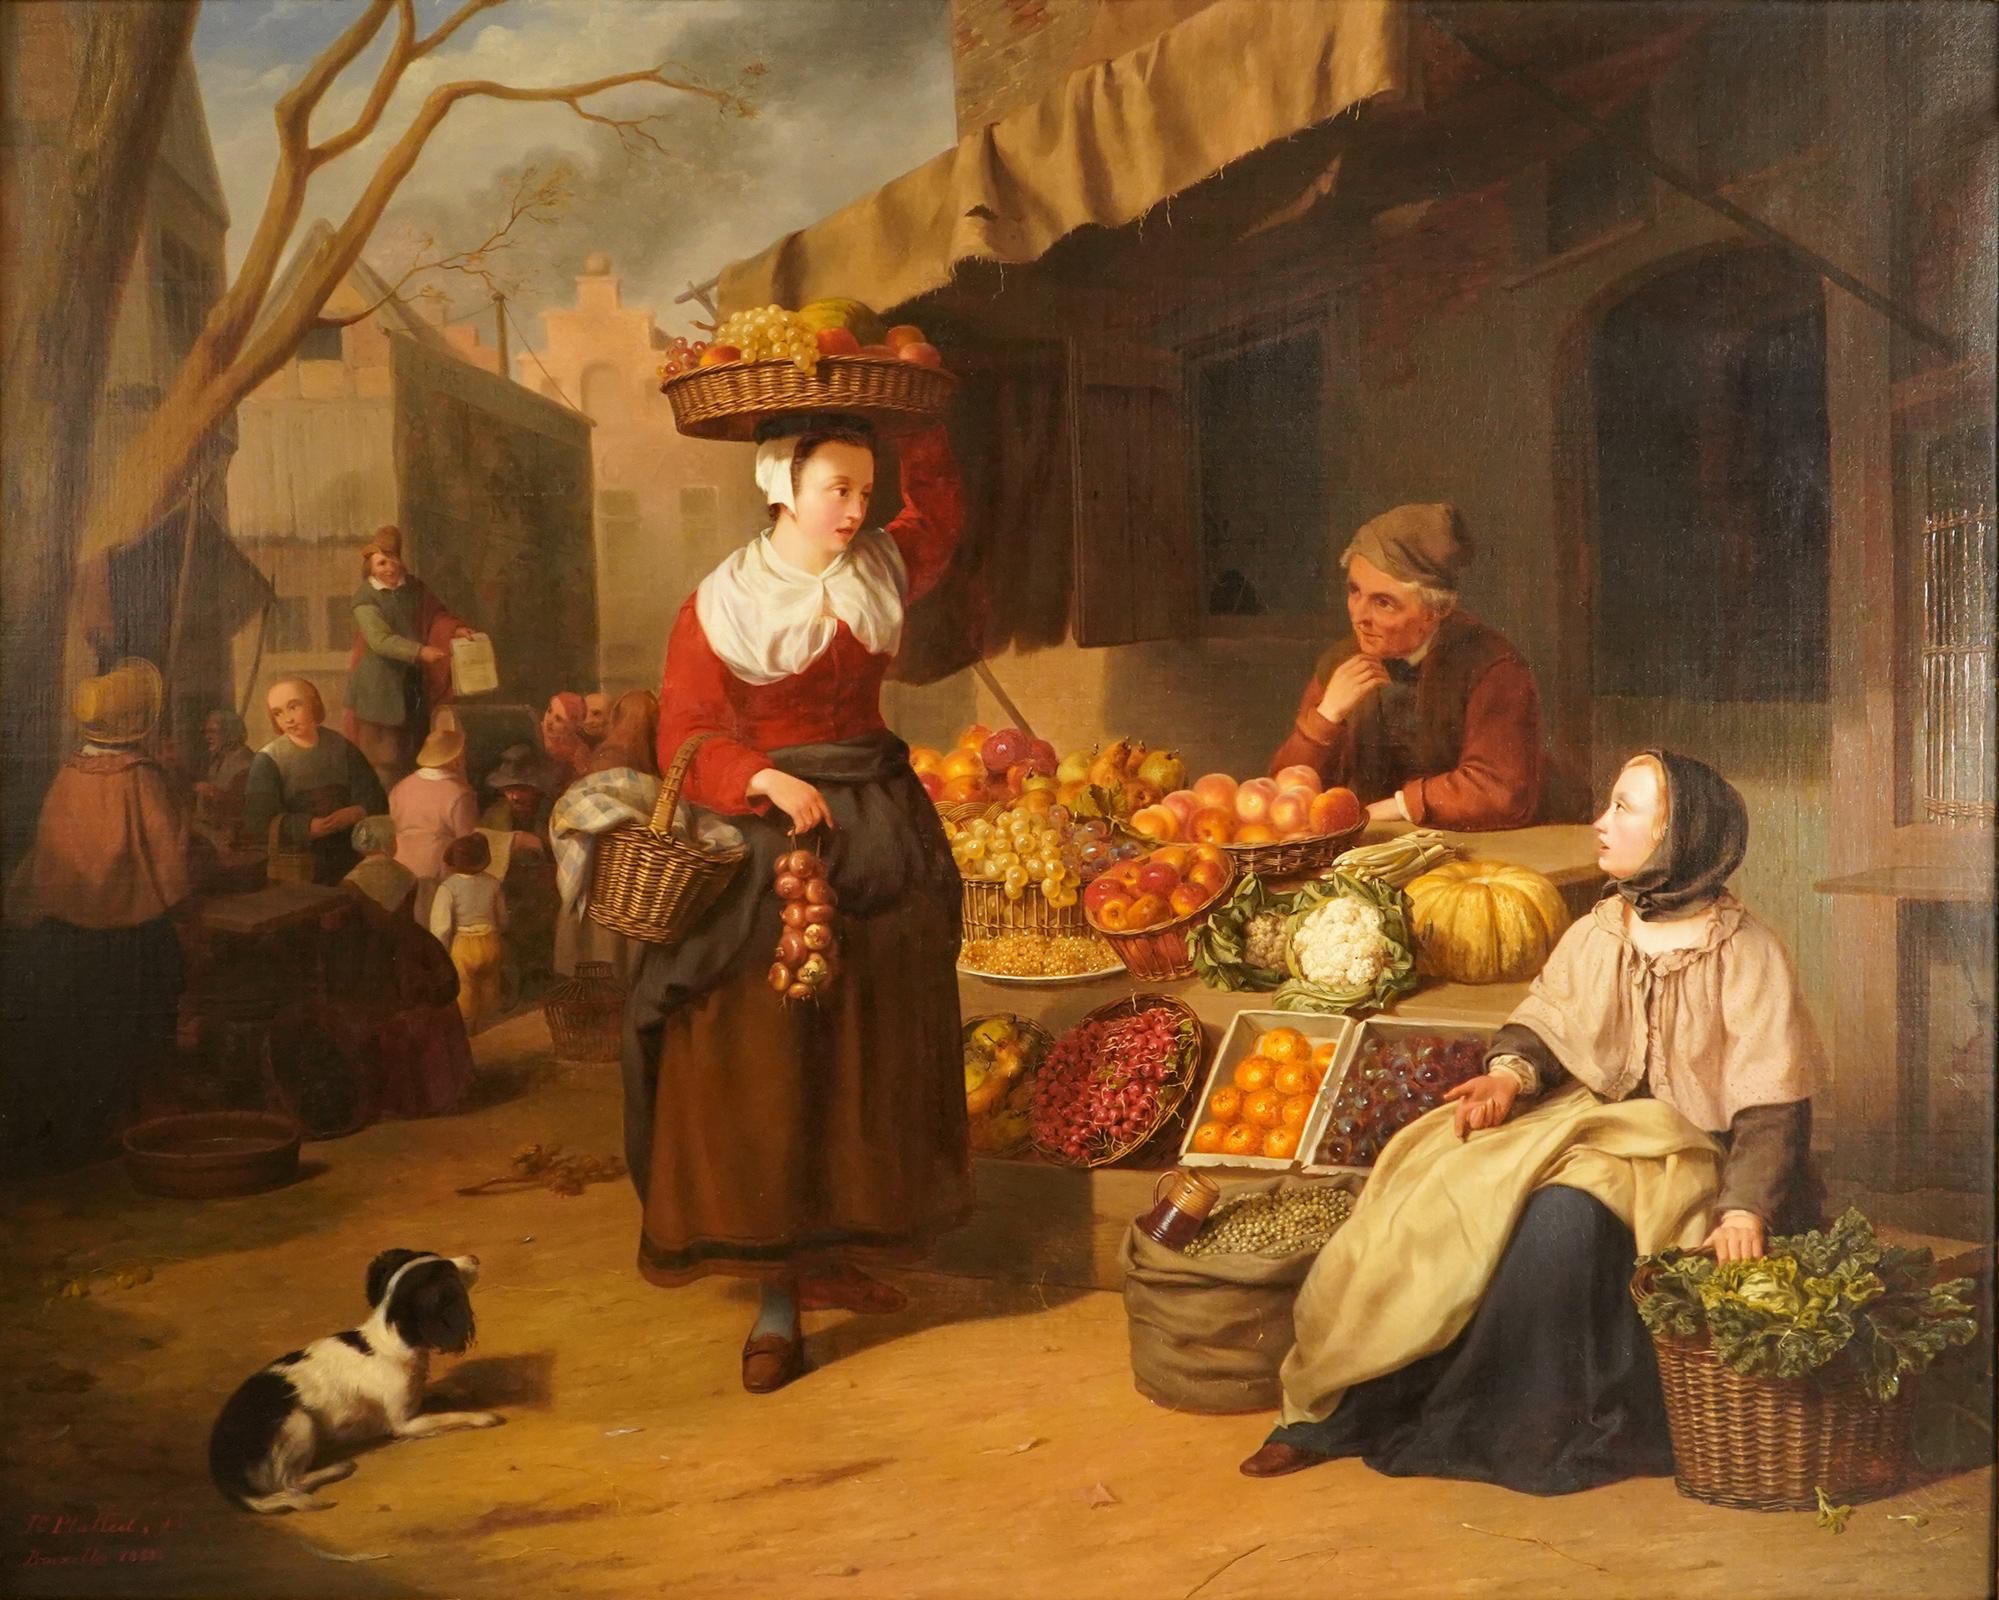 Jean N. Platteel (Belgian, 19th c.)

Signed lower left: Bruxelles 1863

30 x 38 inch.

Oil on Canvas